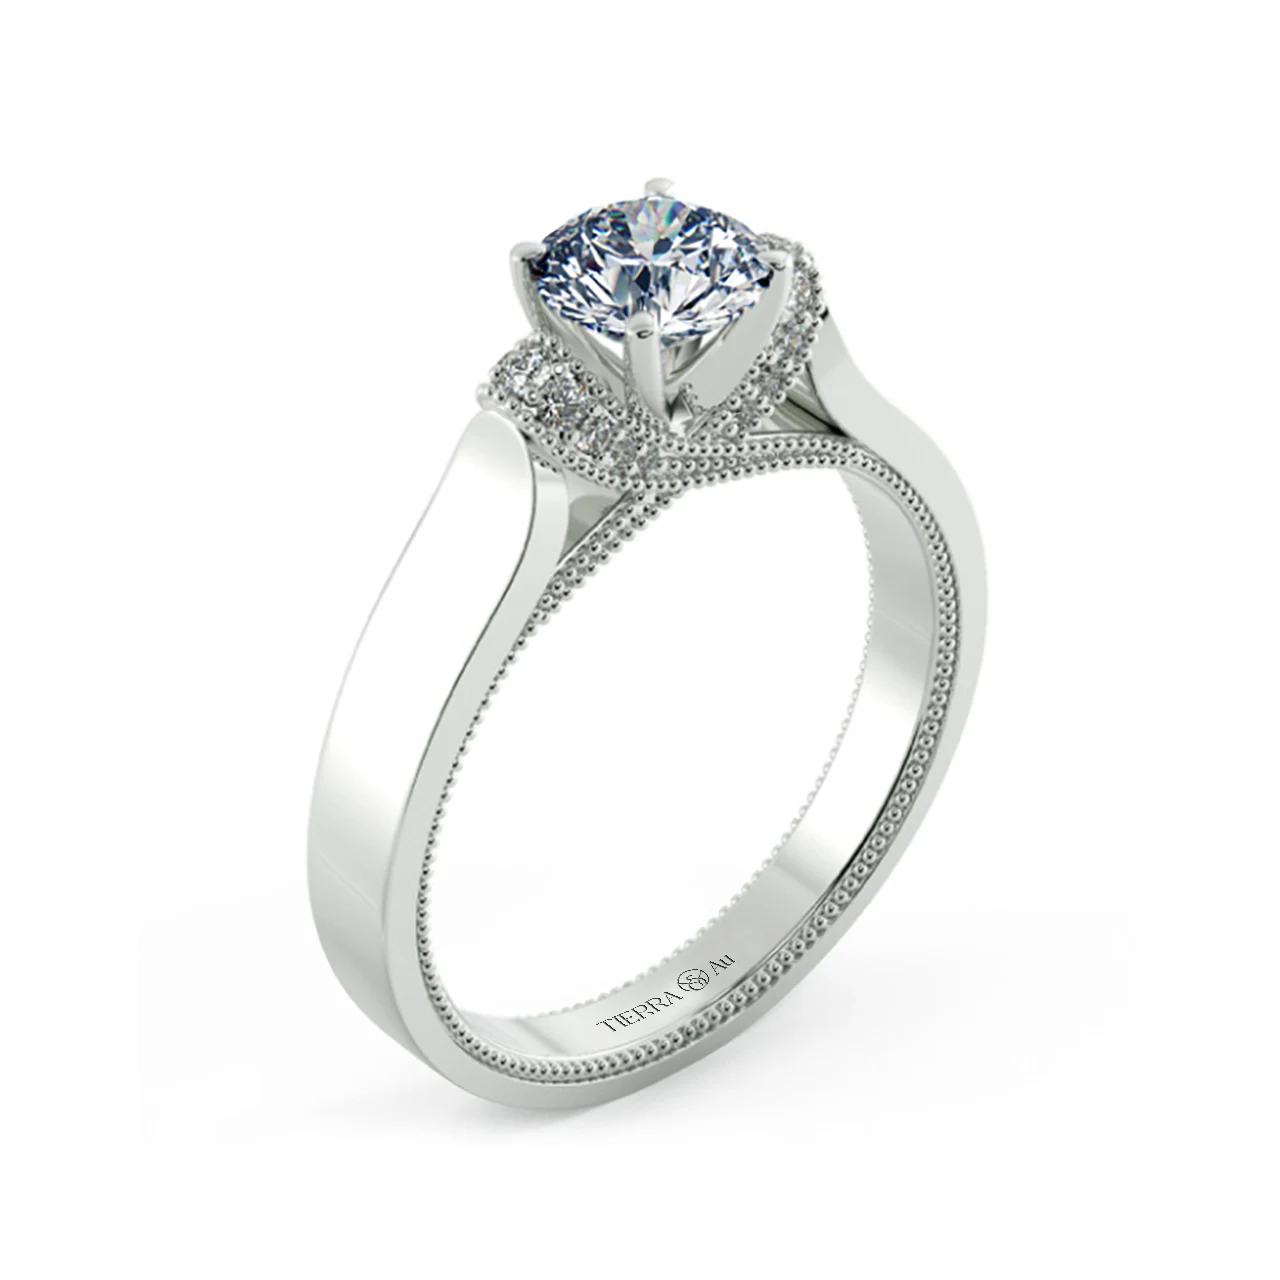 Royal Design Engagement Ring NCH9913 4